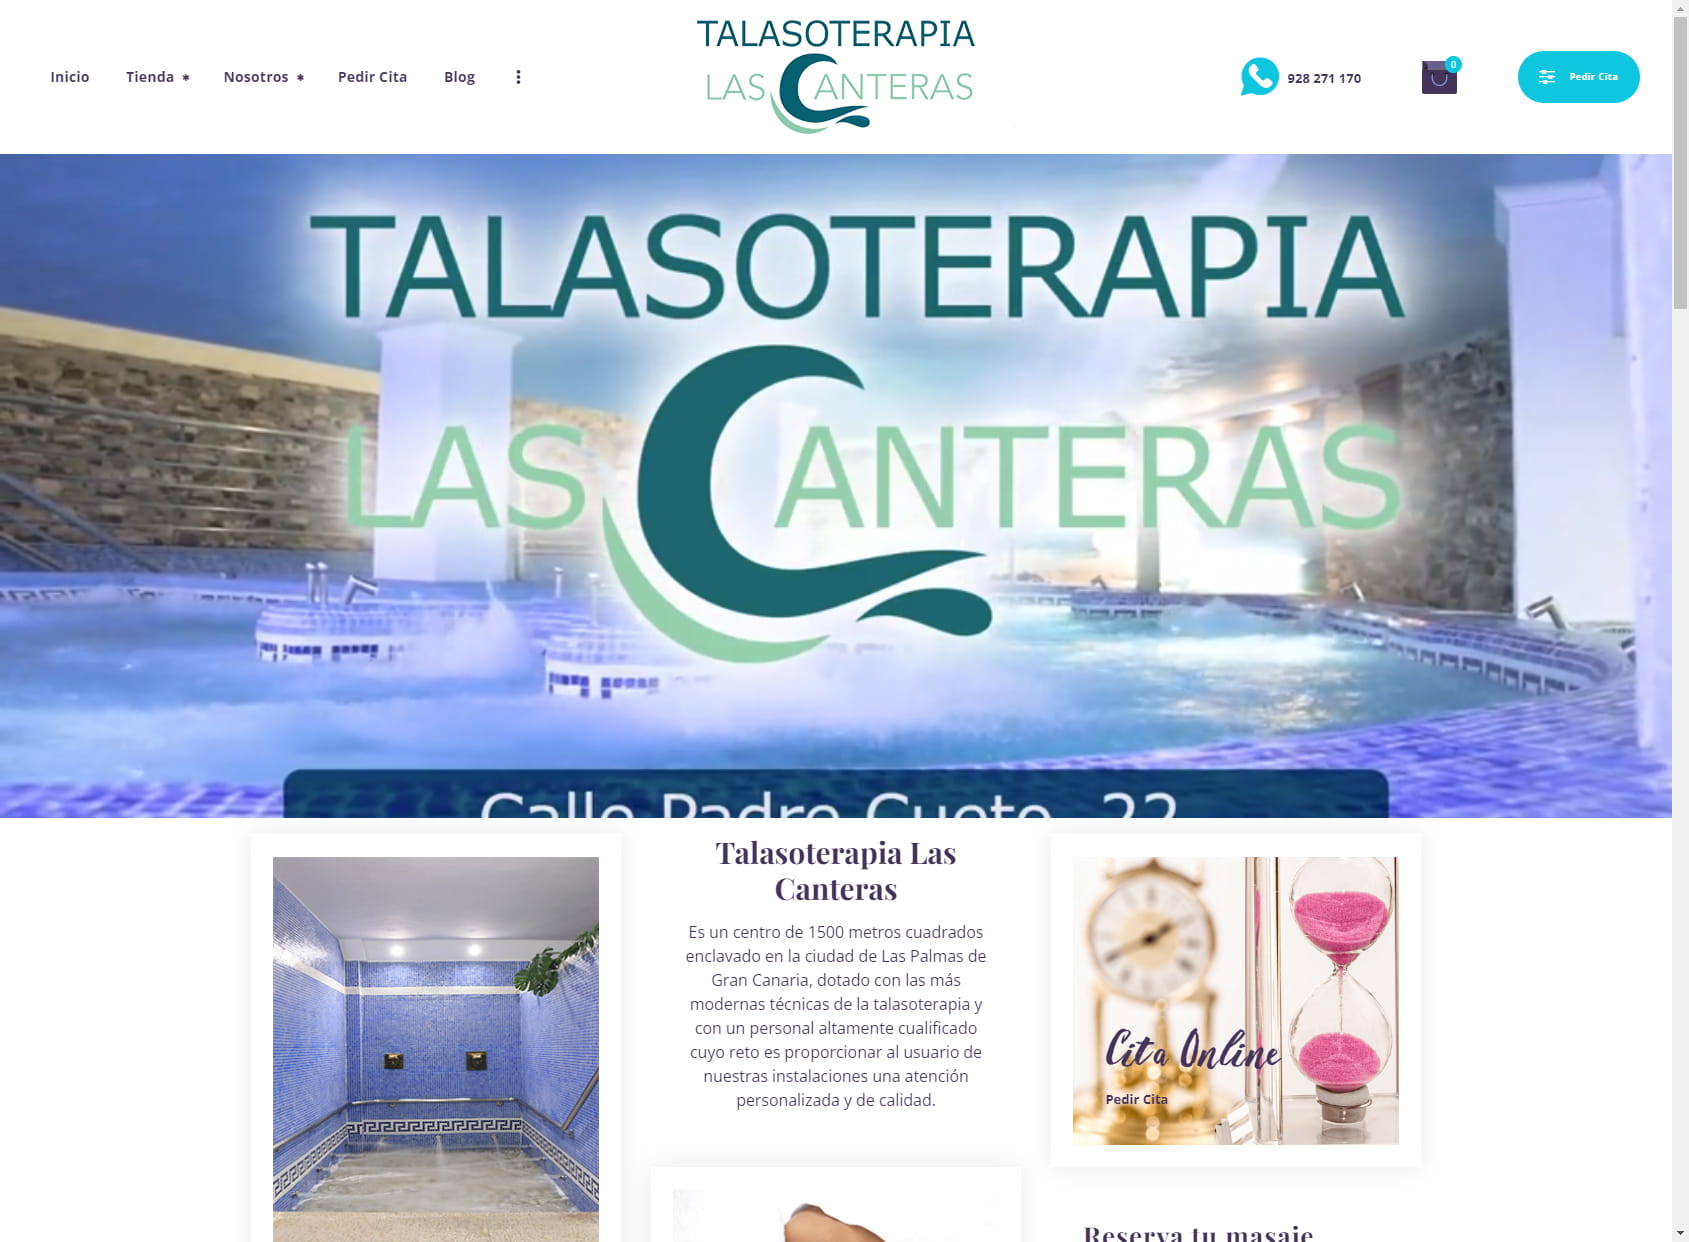 Talasoterapia Las Canteras